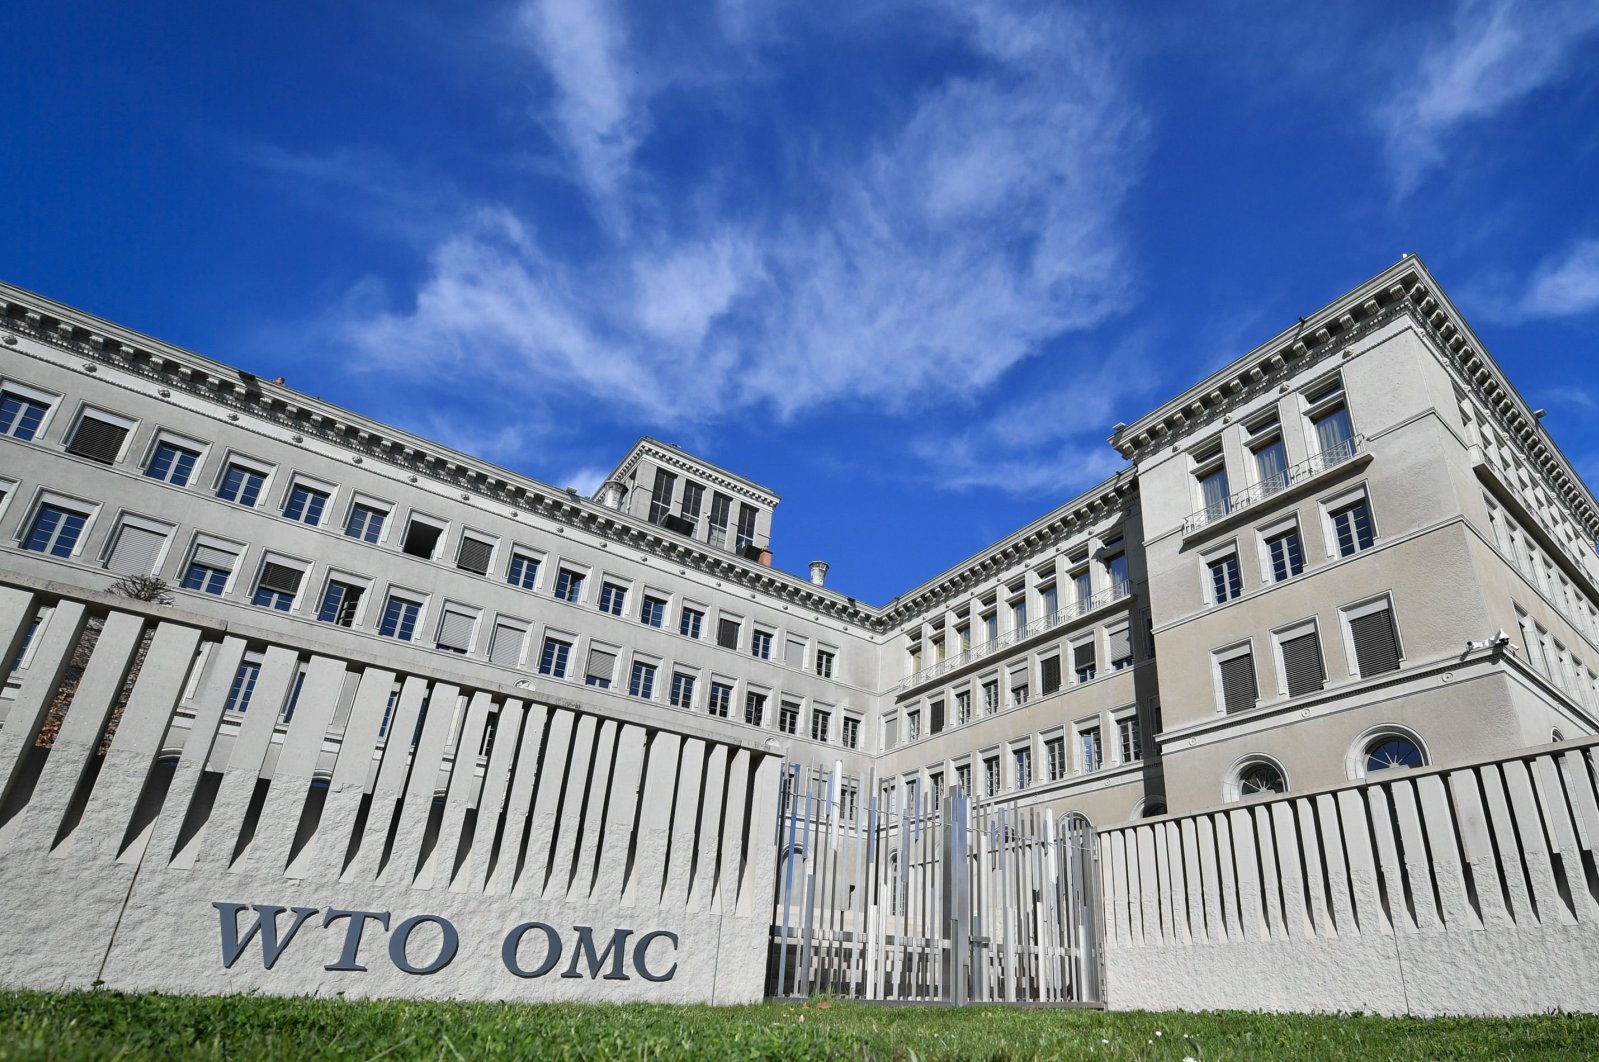 The World Trade Organization (WTO) headquarters are seen in Geneva on April 12, 2018.